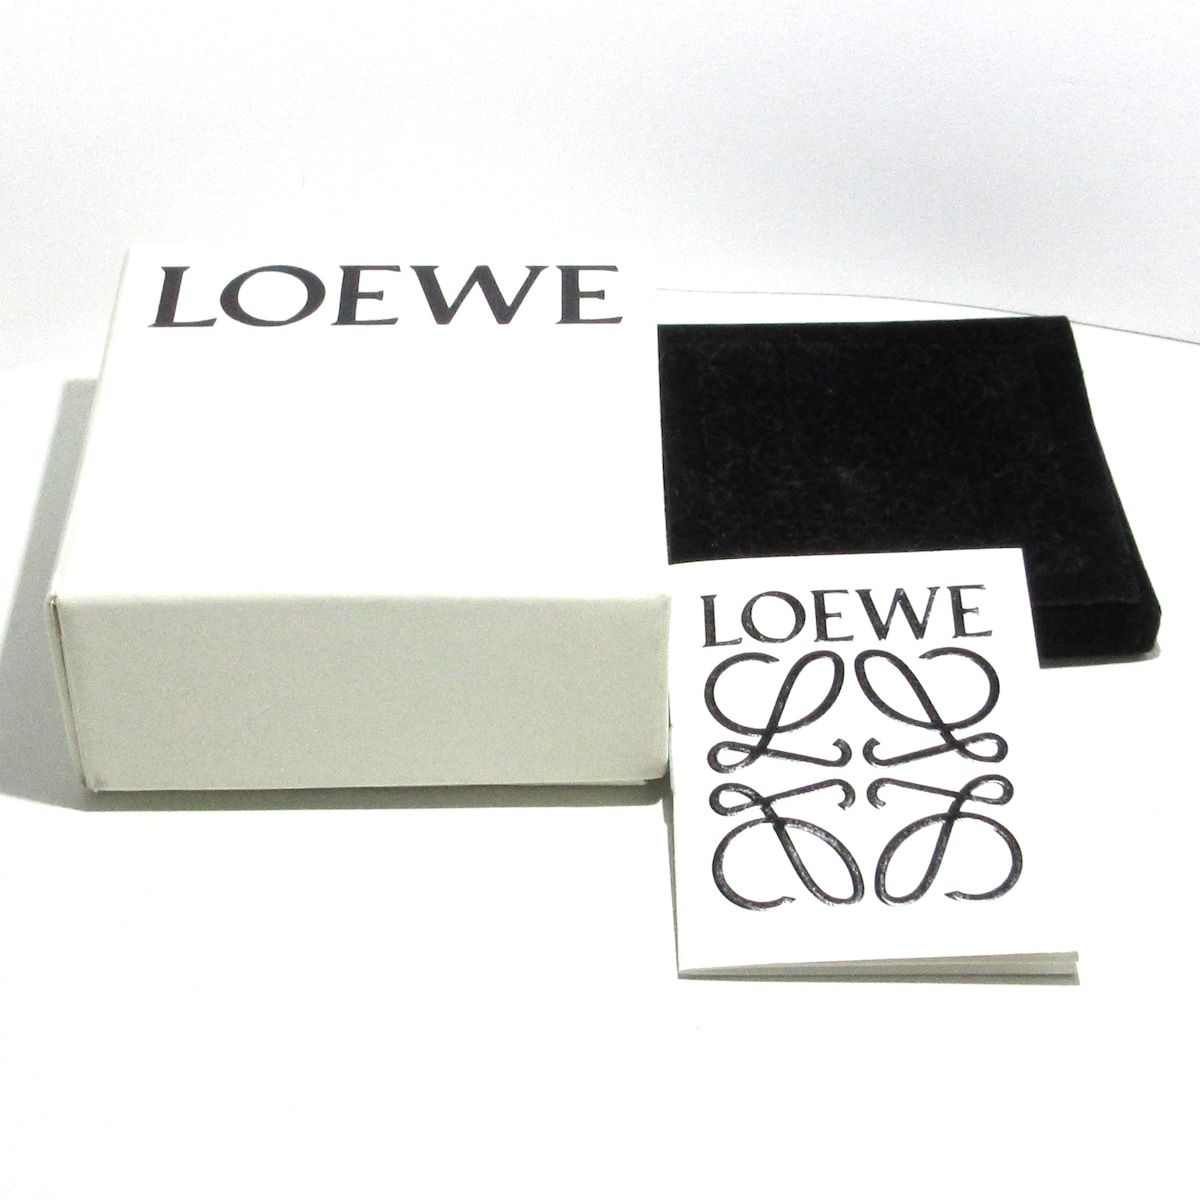 LOEWE(ロエベ) ピアス美品 - J647239X31 金属素材 ゴールド アナグラム-